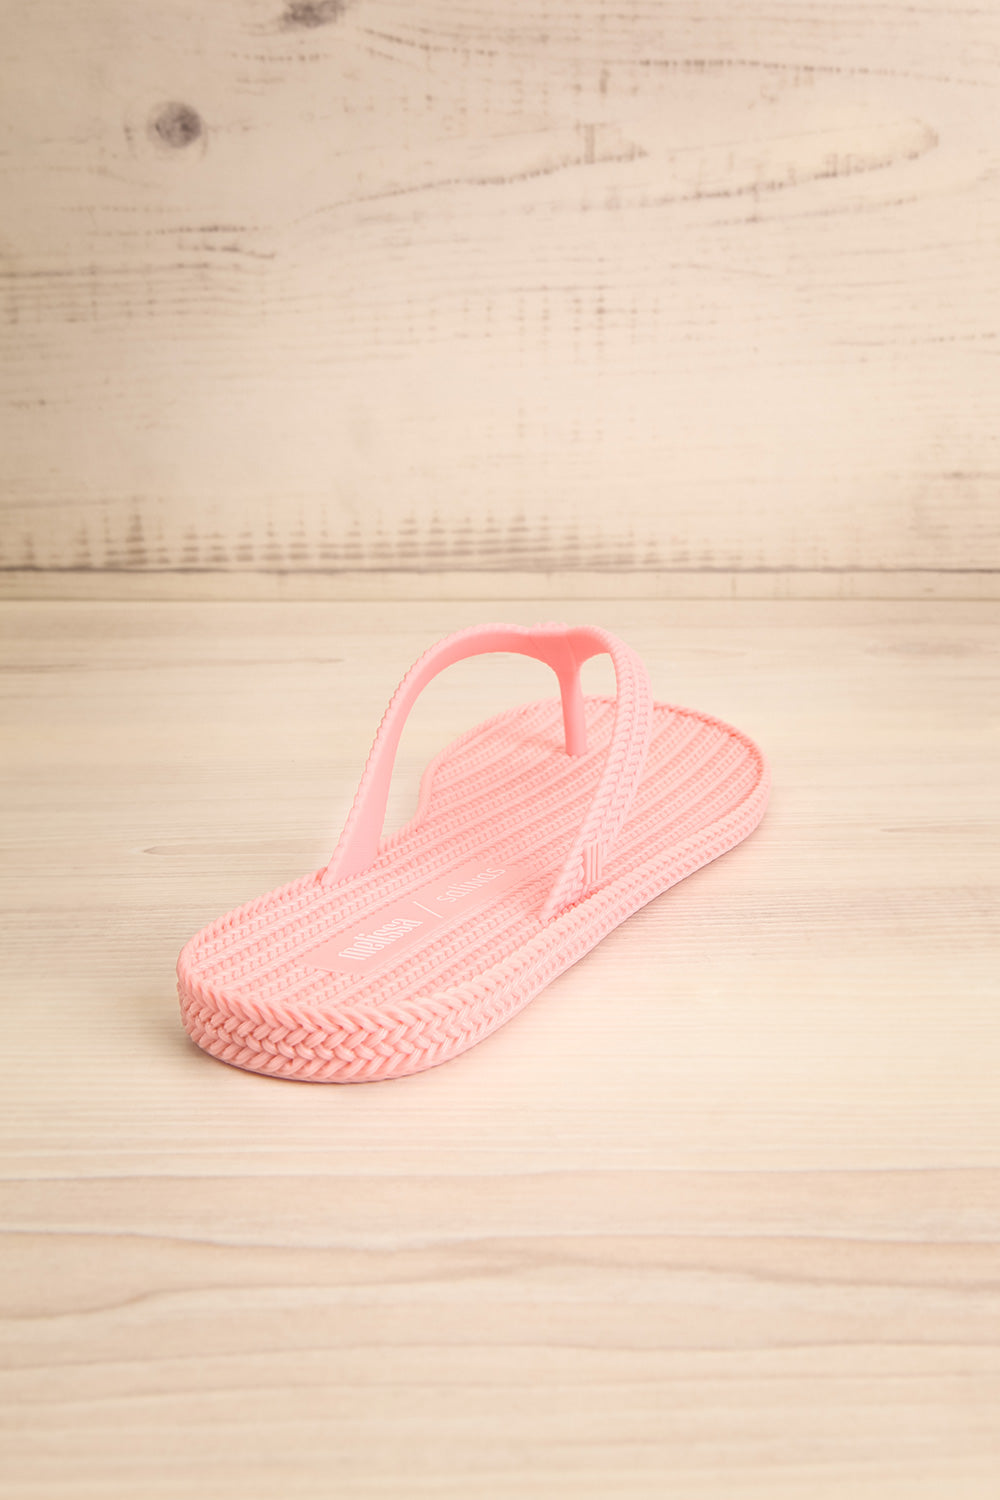 Texel Pink "Braided" Slip-On Sandals | La Petite Garçonne Chpt. 2 8